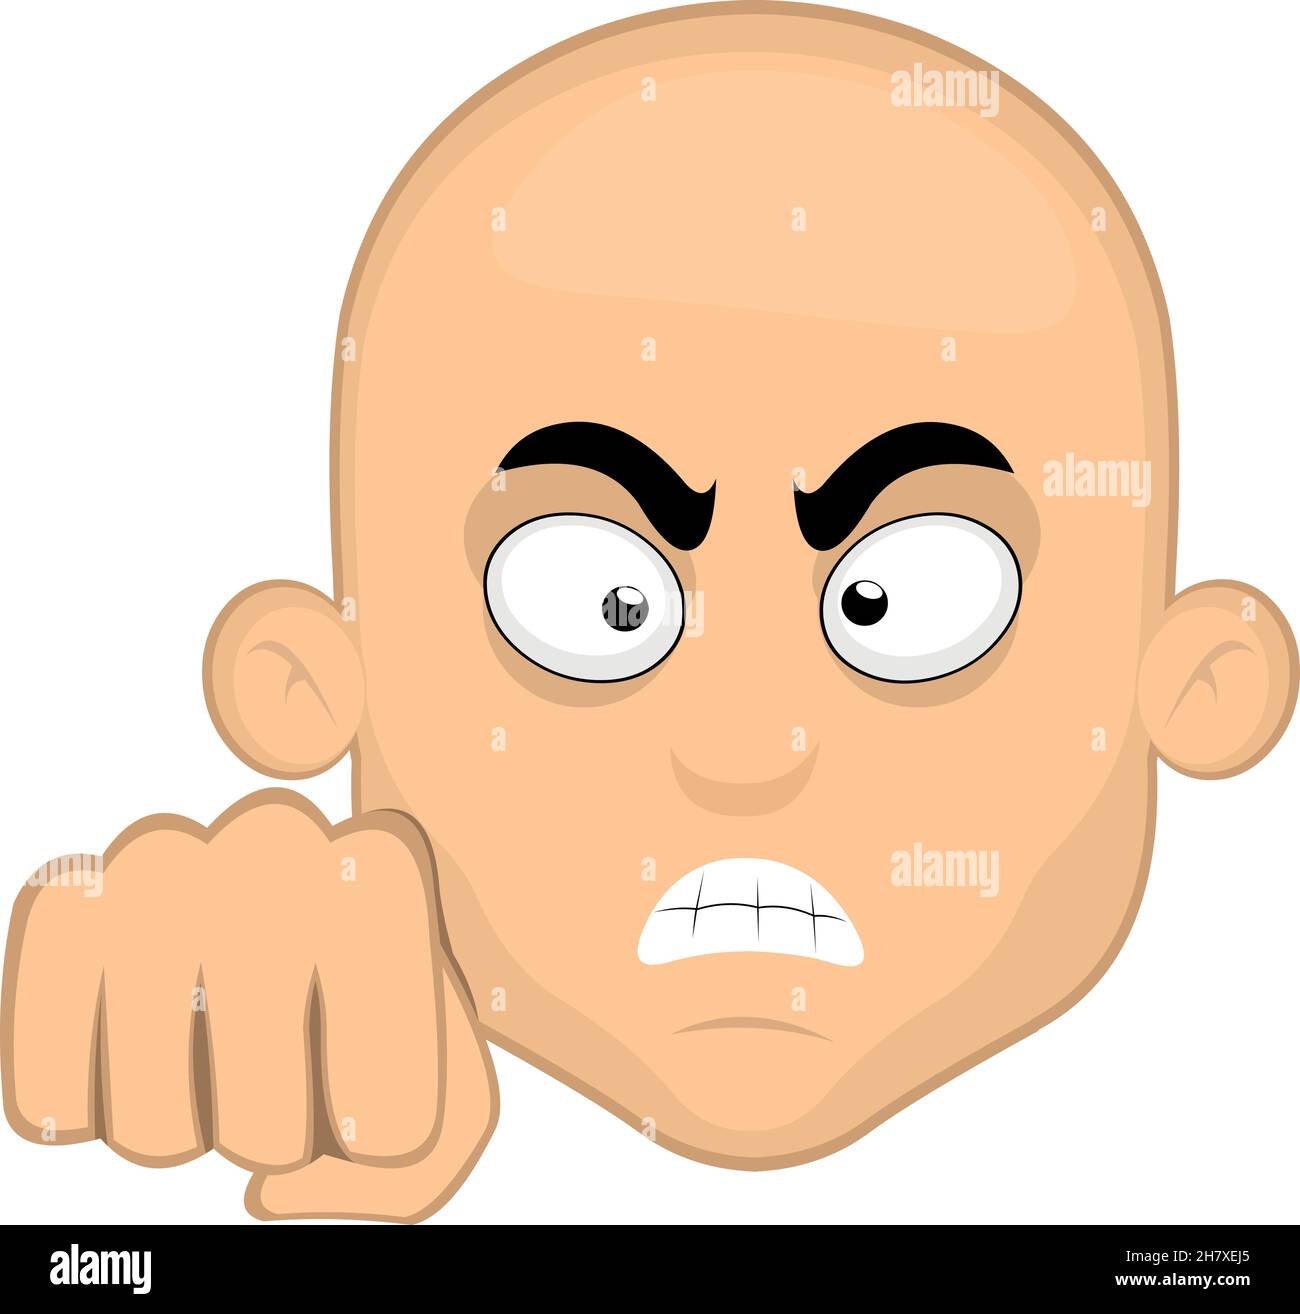 Vector illustration of the face of a cartoon bald man giving a fist bump  Stock Vector Image & Art - Alamy